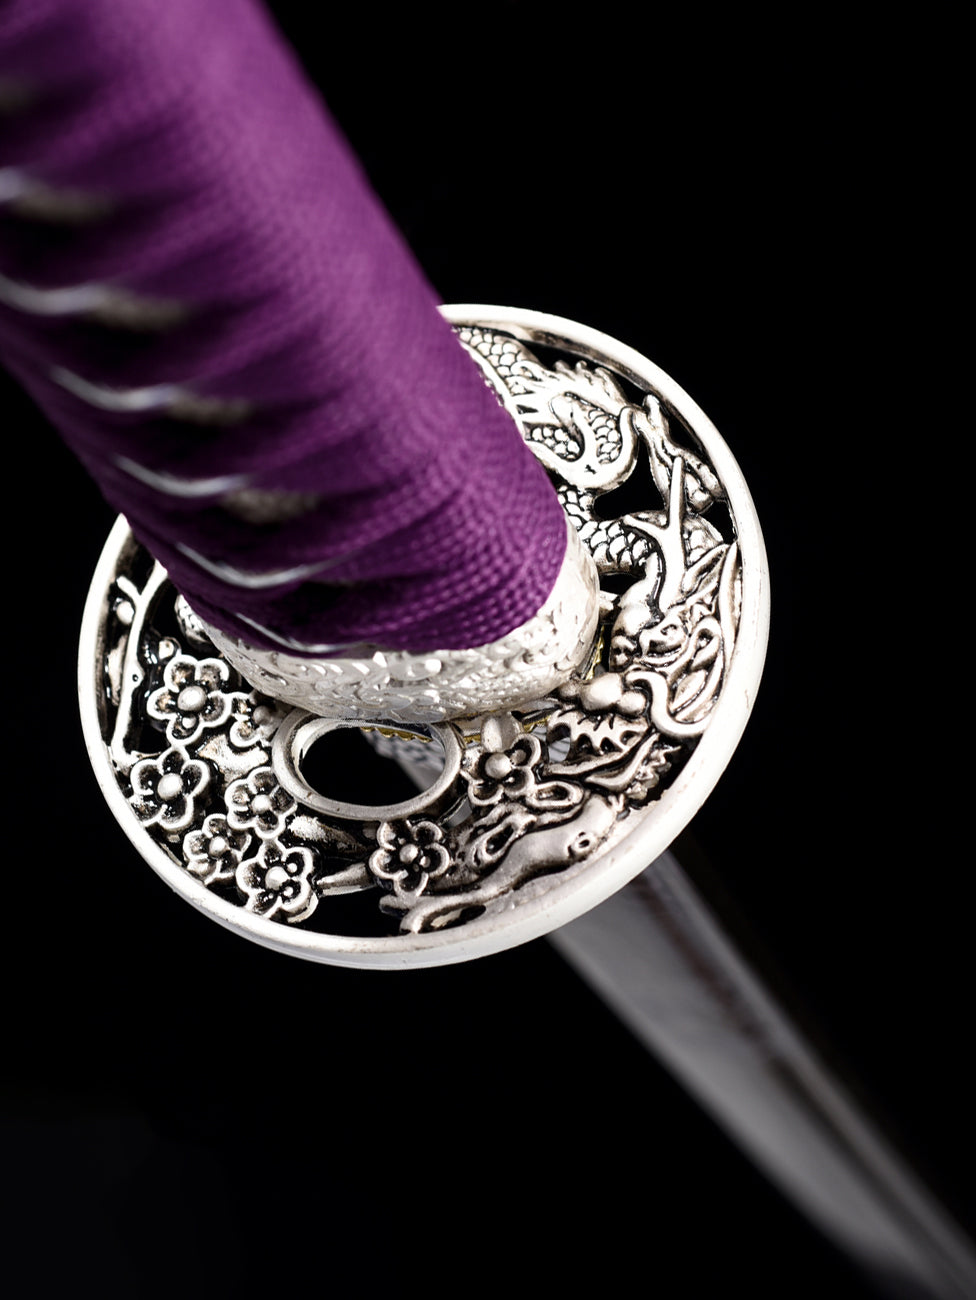 1045 steel bluing Machine engraving Mech warrior katana Japanese sword